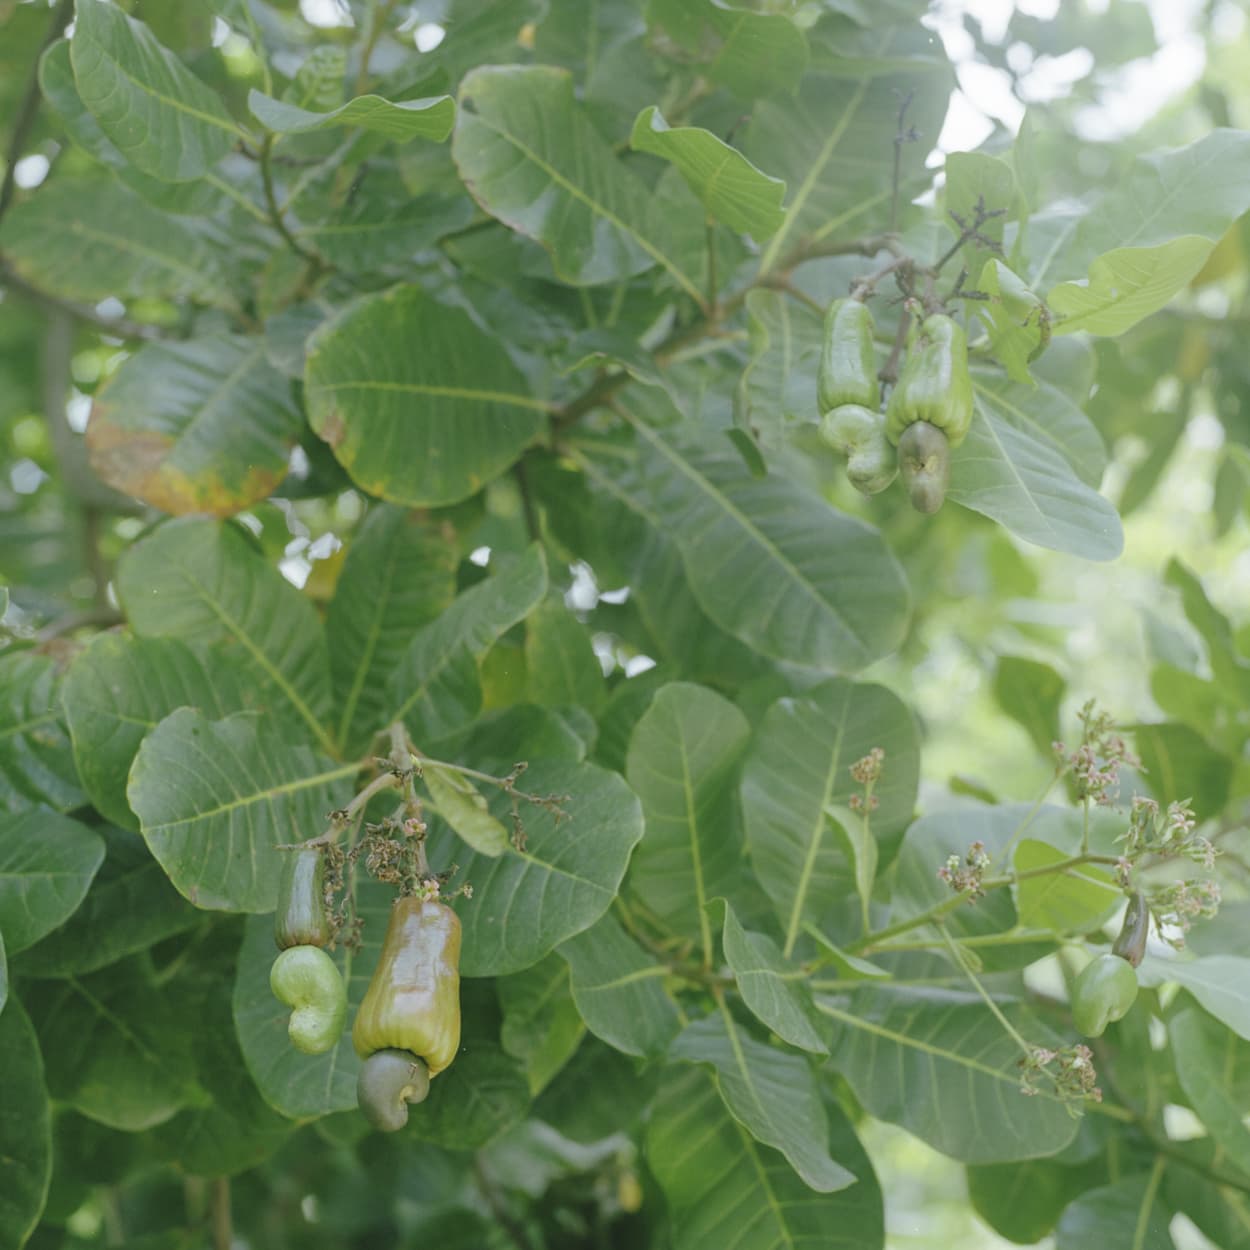 Cashew nut tree on St. Lucia Island